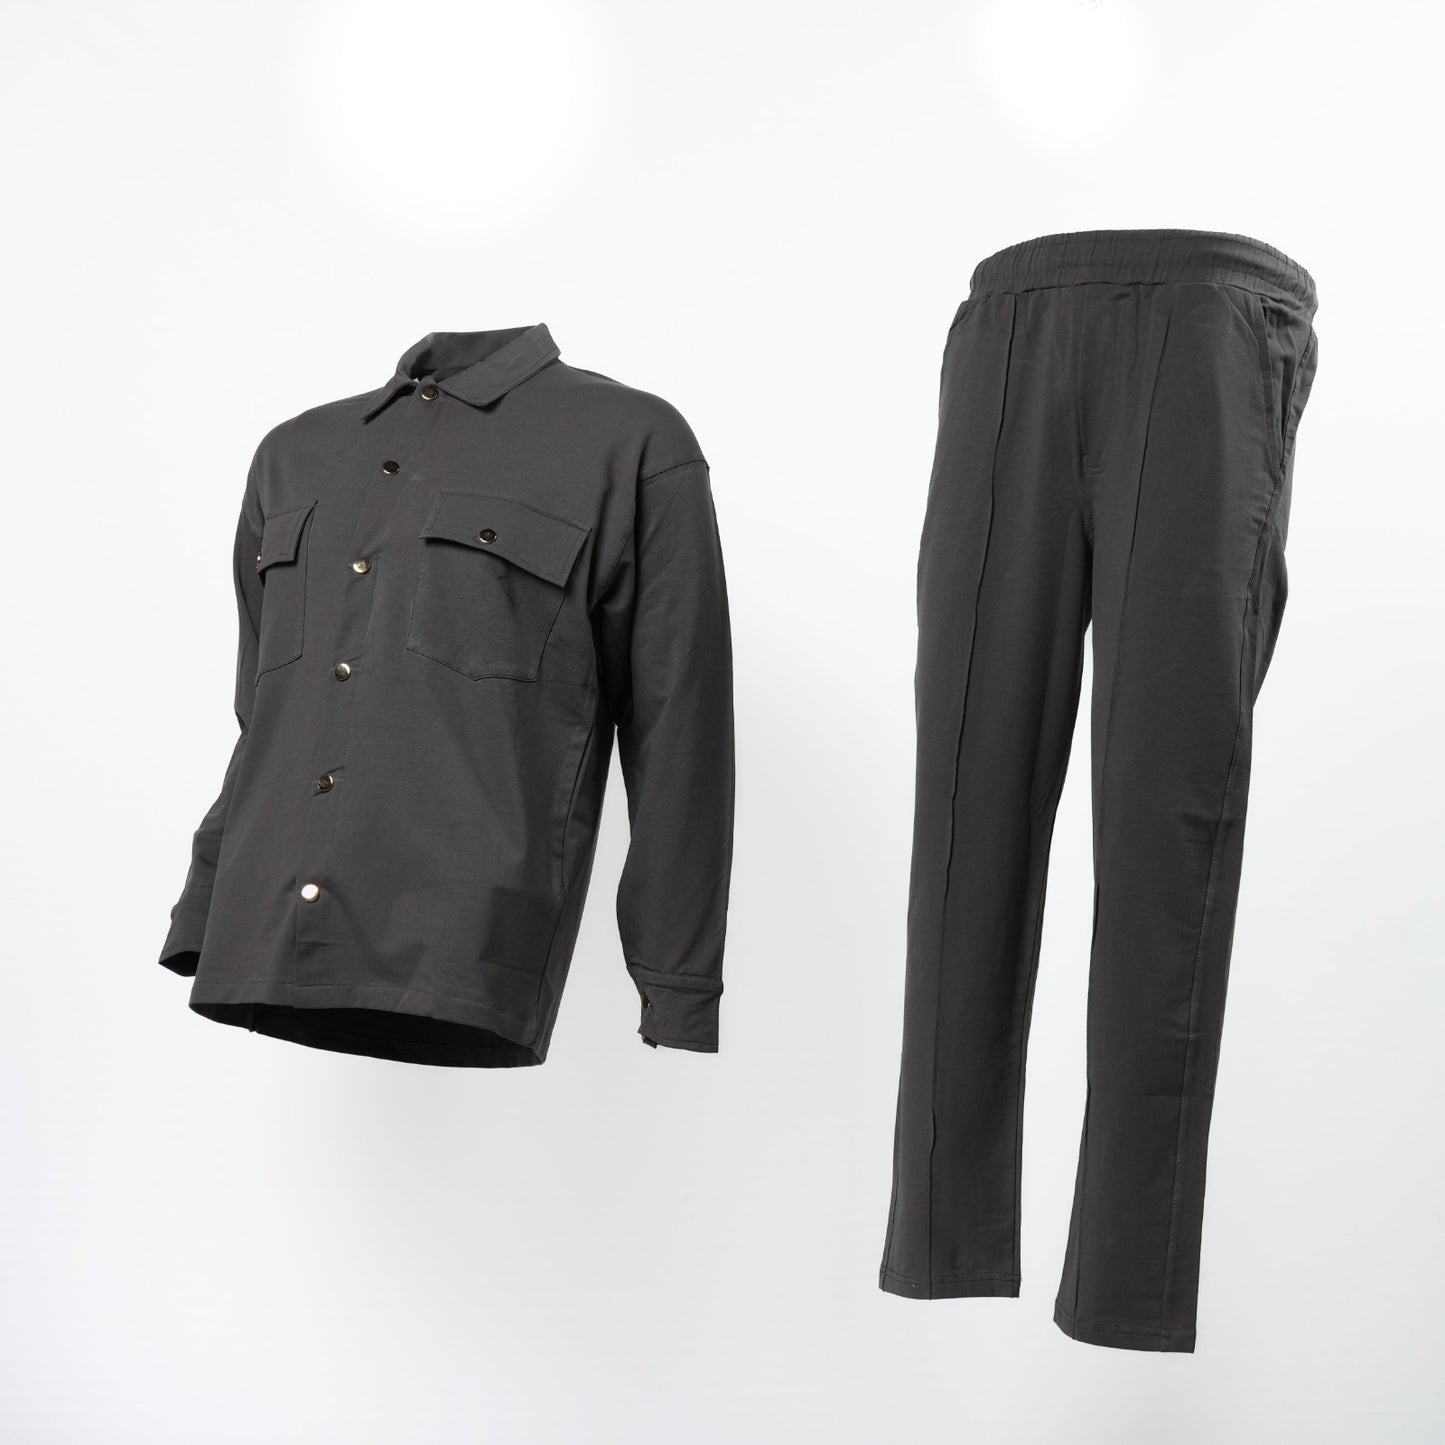 Luxe Ensemble: Premium Shirt & Pants Set